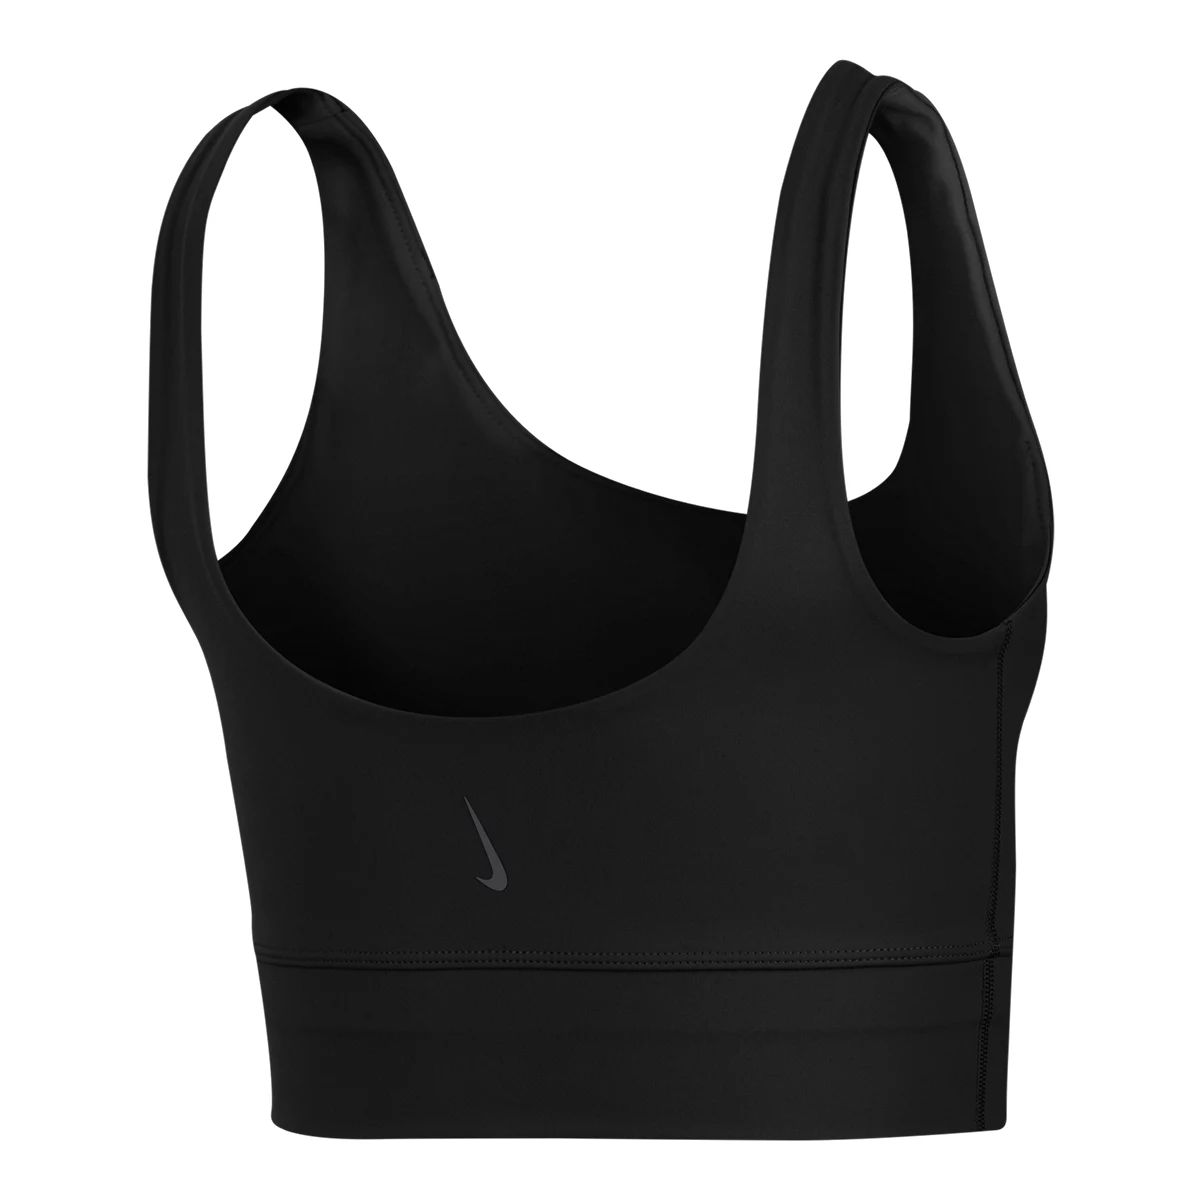 Nike Training Nike Yoga luxe crop top in black - ShopStyle